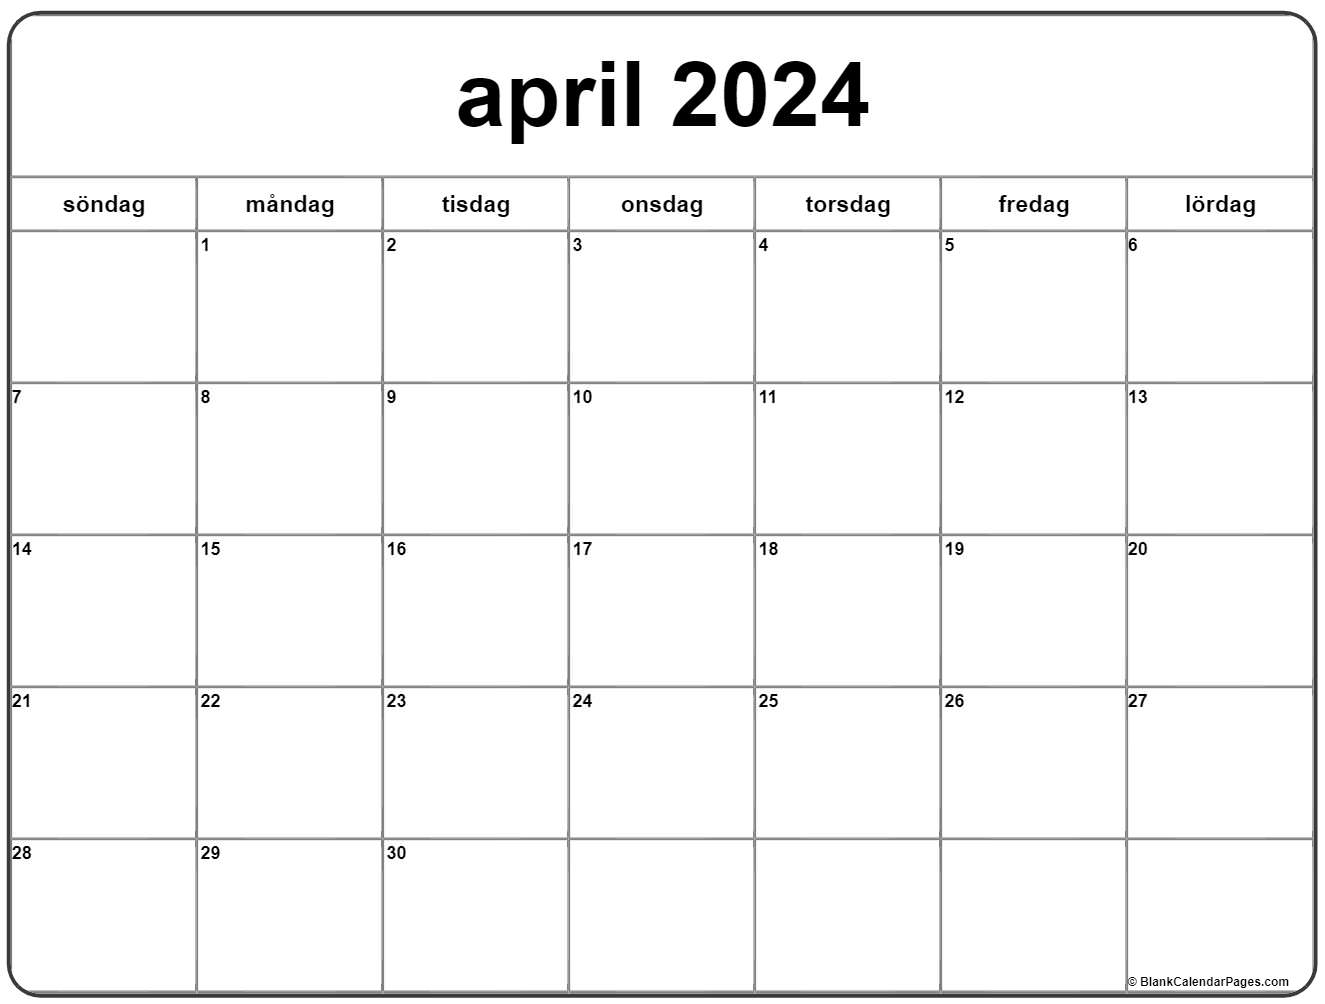 april 2022 kalender Svenska | Kalender april